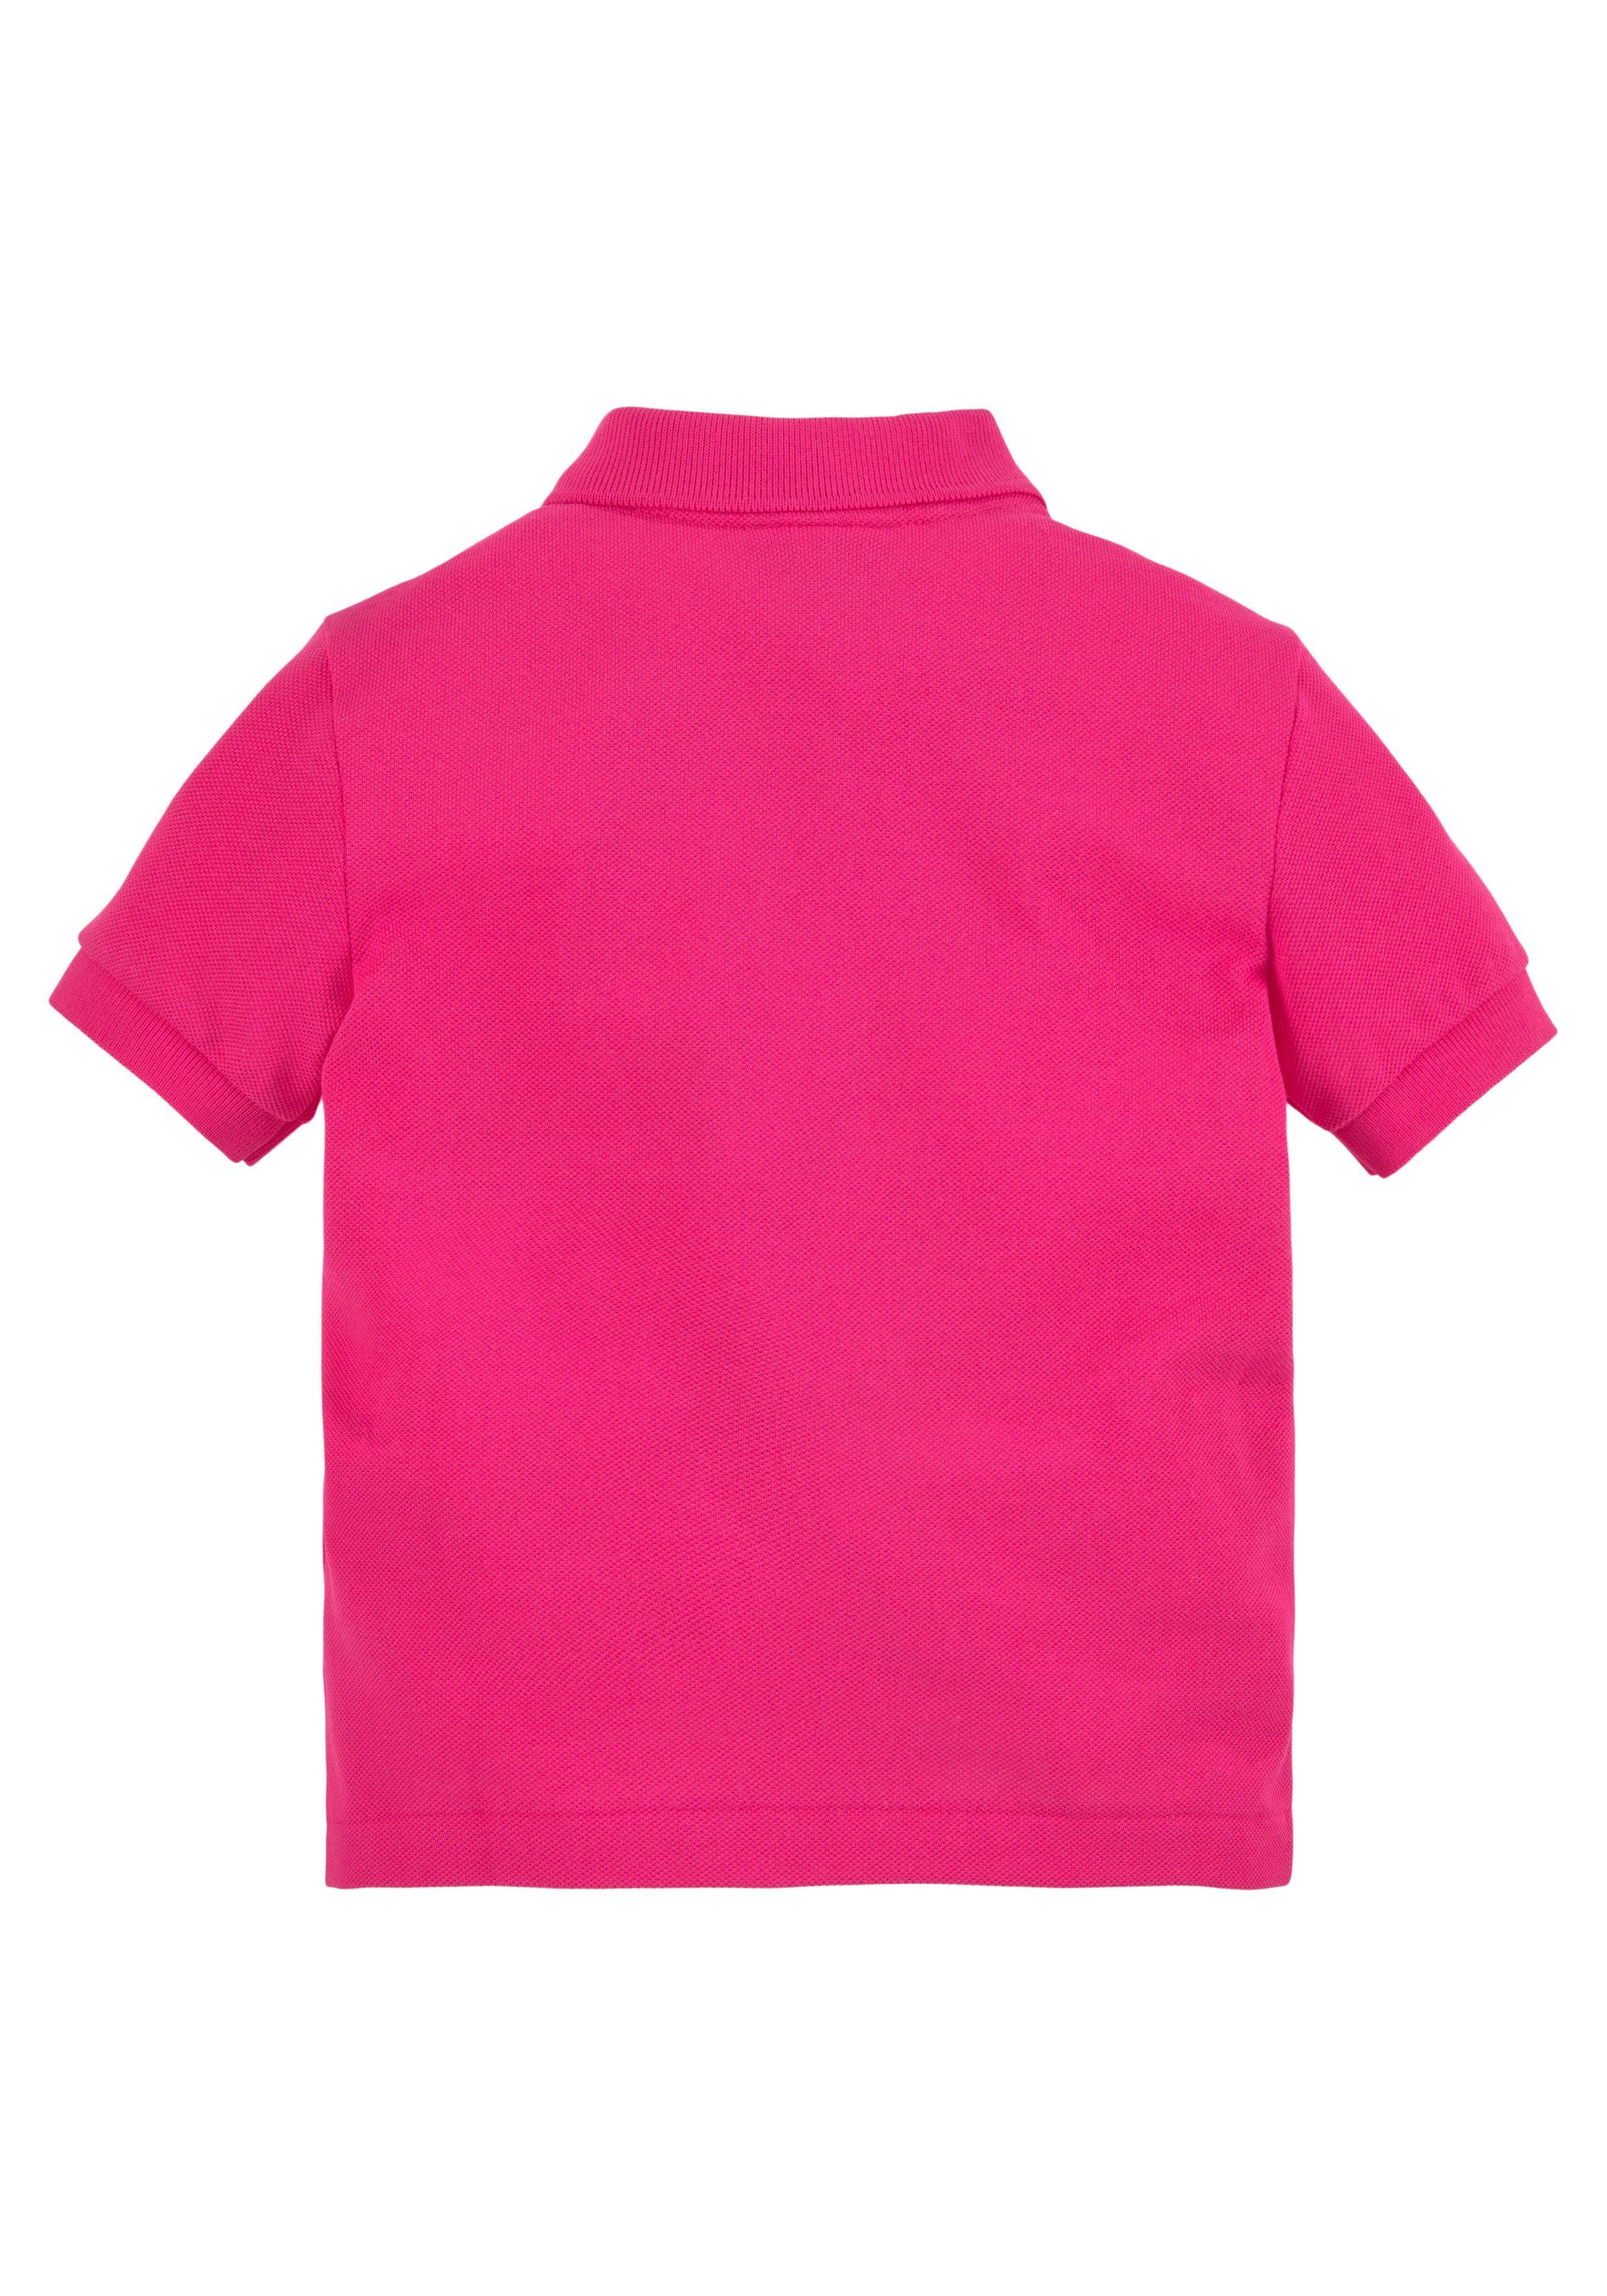 Lacoste Poloshirt mit Kids Kroko MiniMe,Junior, Kids aufgesticktem Polo Junior Kinder magenta